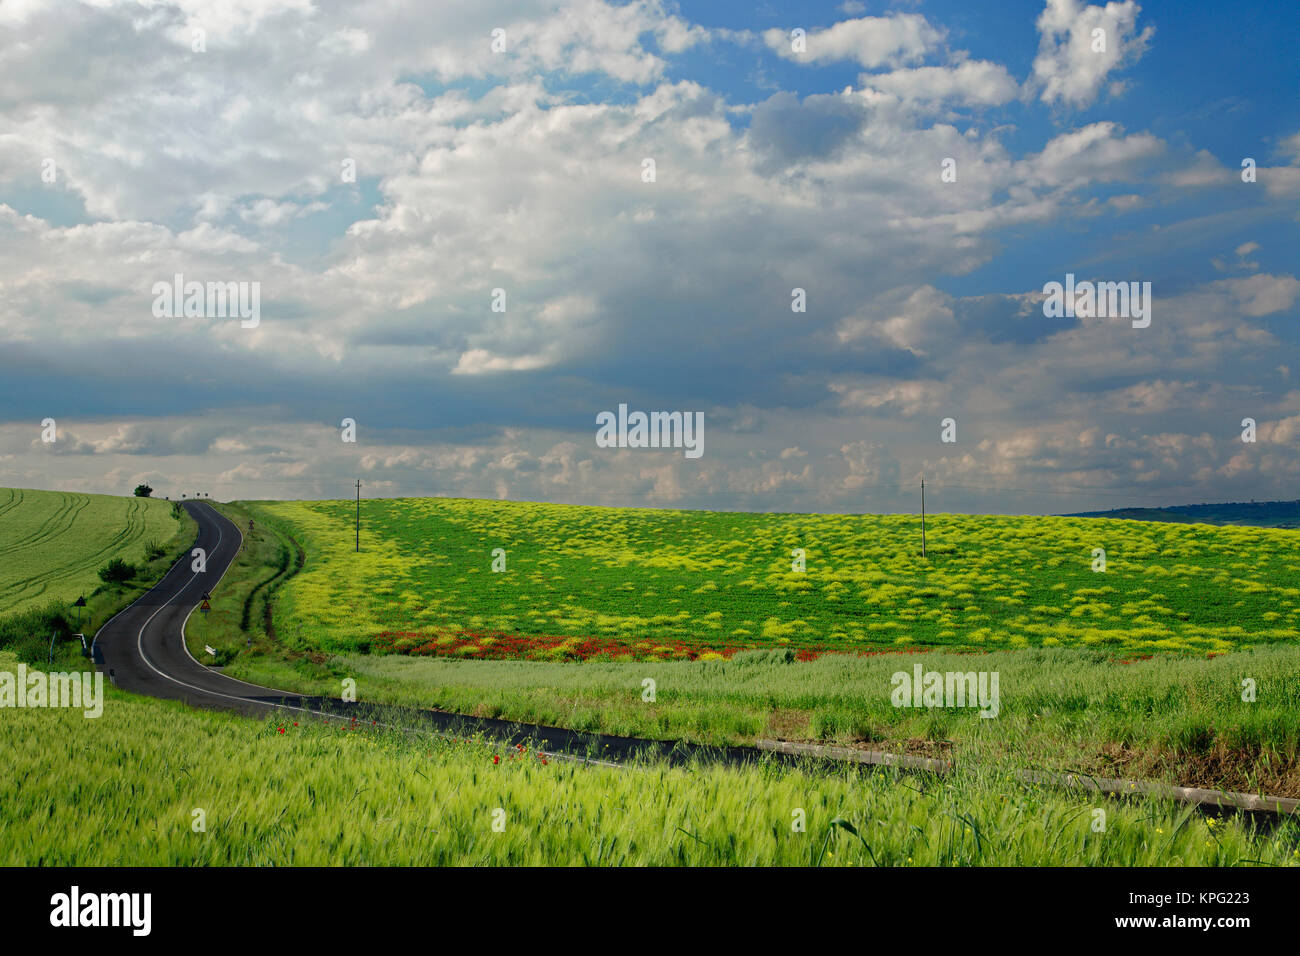 Carretera serpenteante a través de campos agrícolas, Toscana, Italia Foto de stock